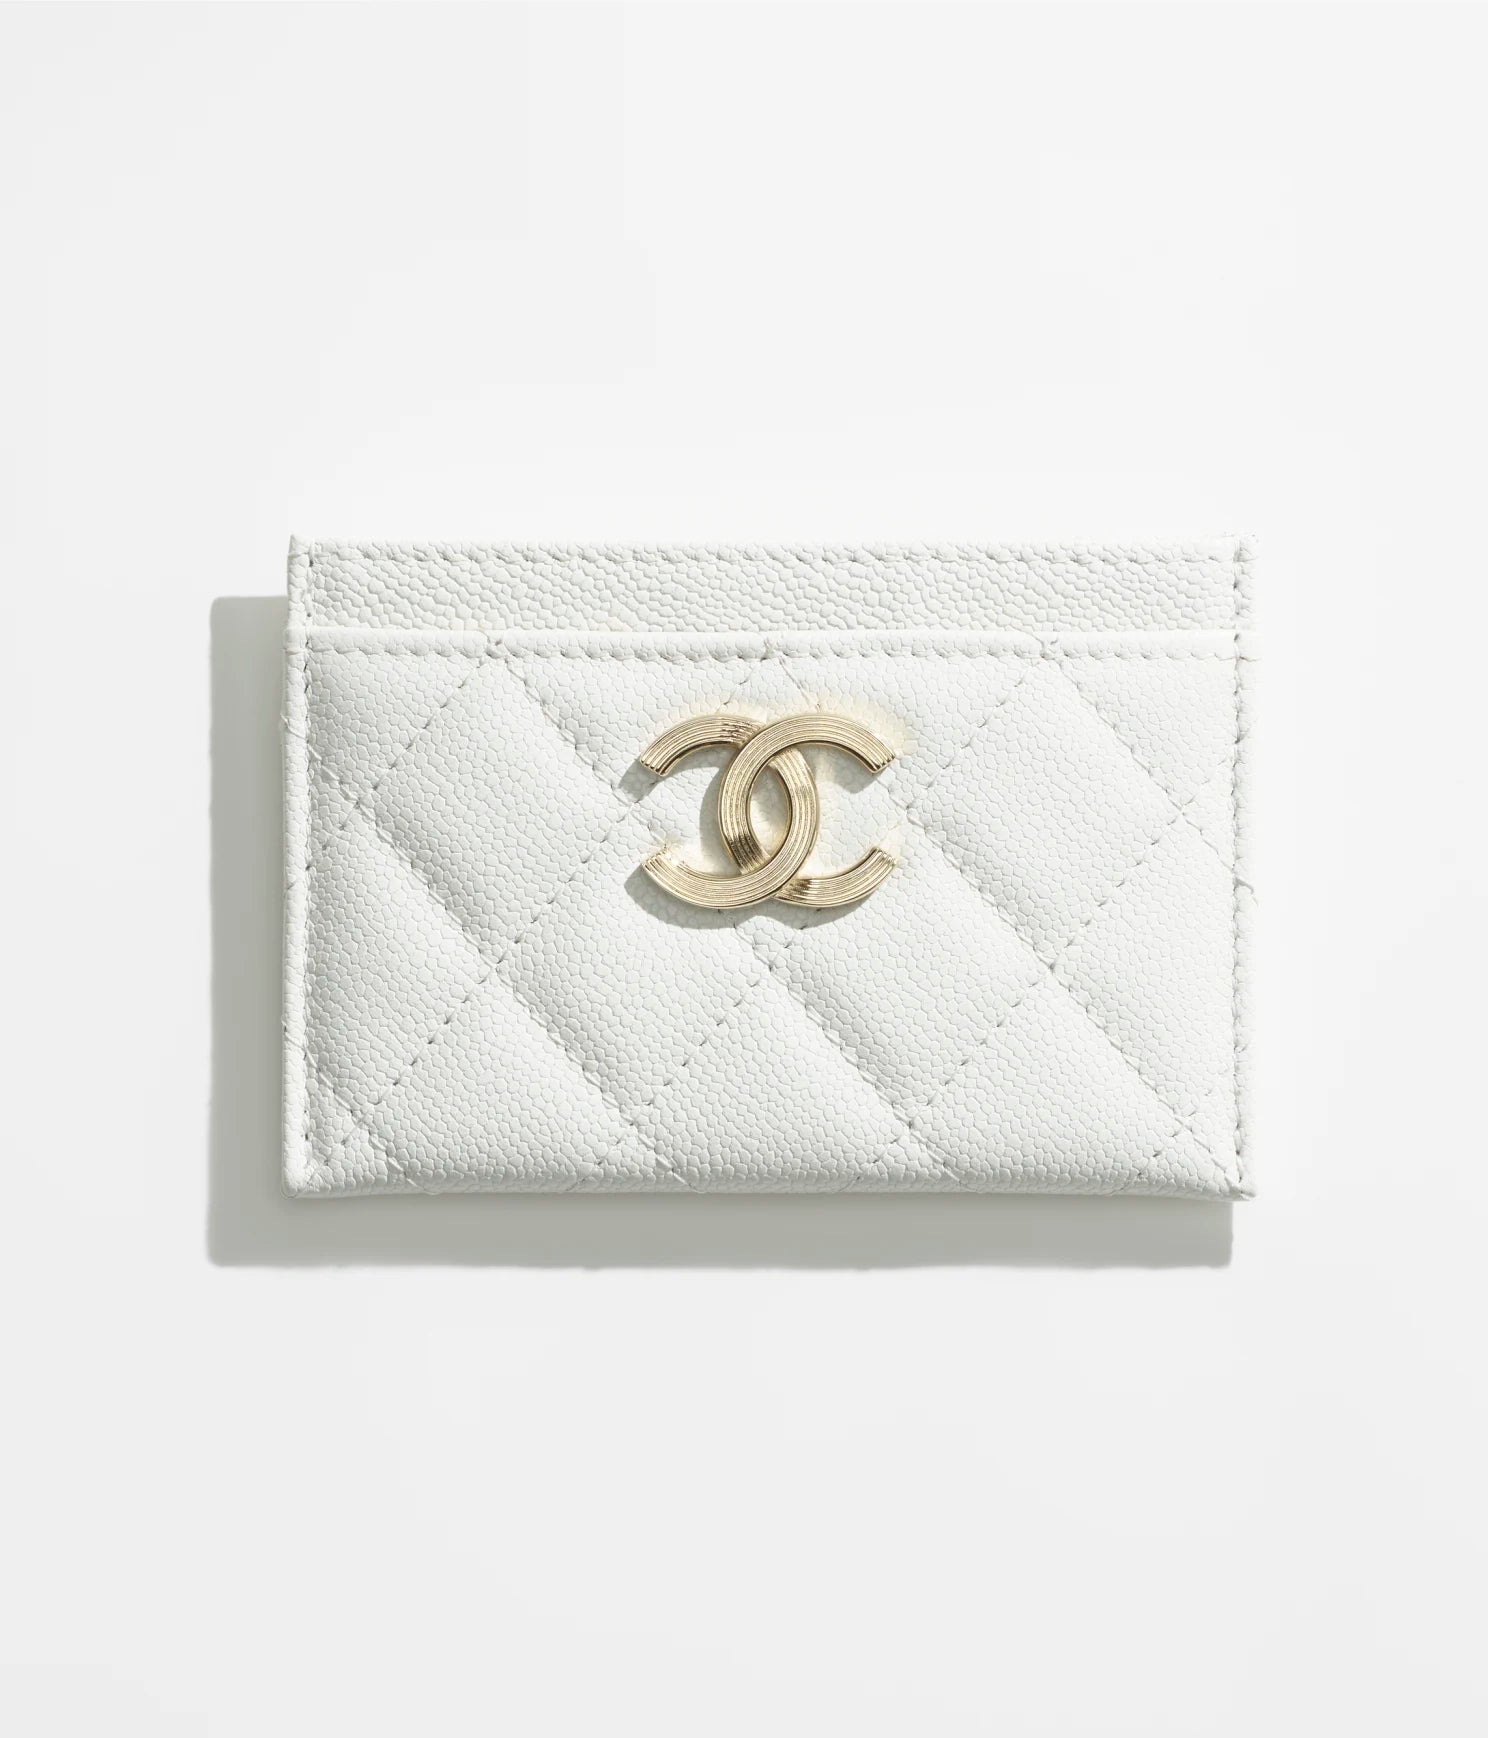 Chanel Card Holder